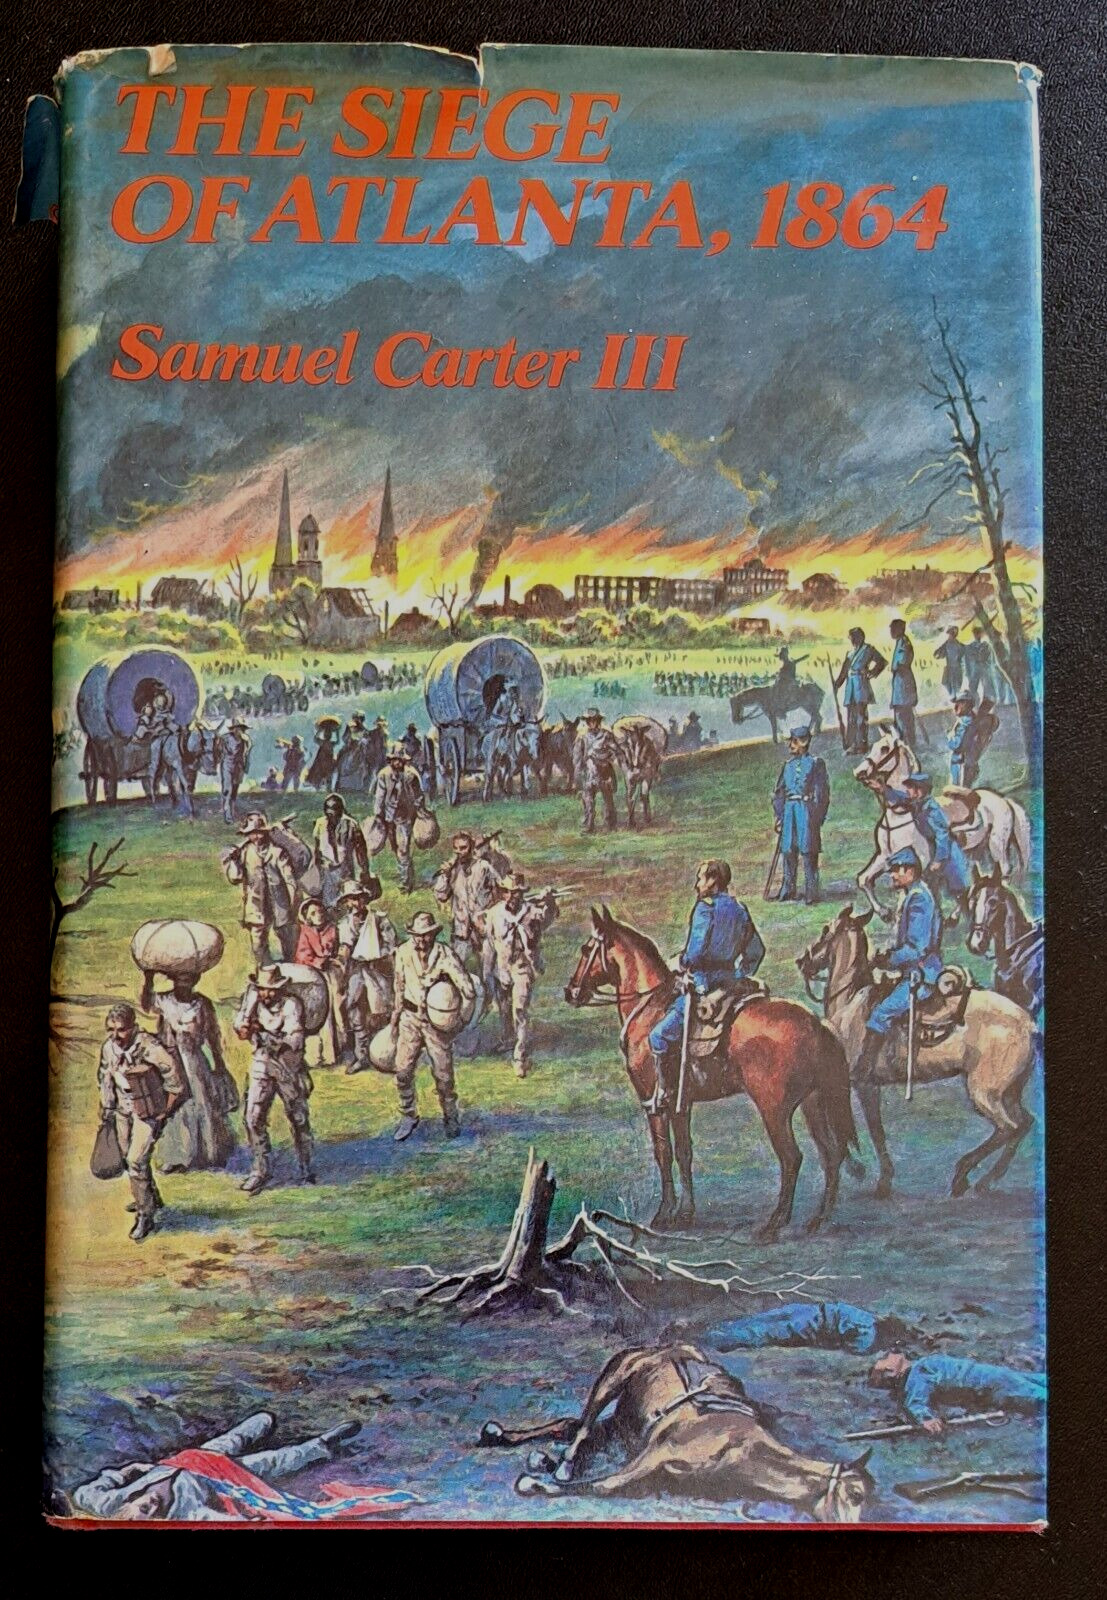 The Siege of Atlanta , 1864 by Samuel Carter III, publ by Bonanza Books, 1973